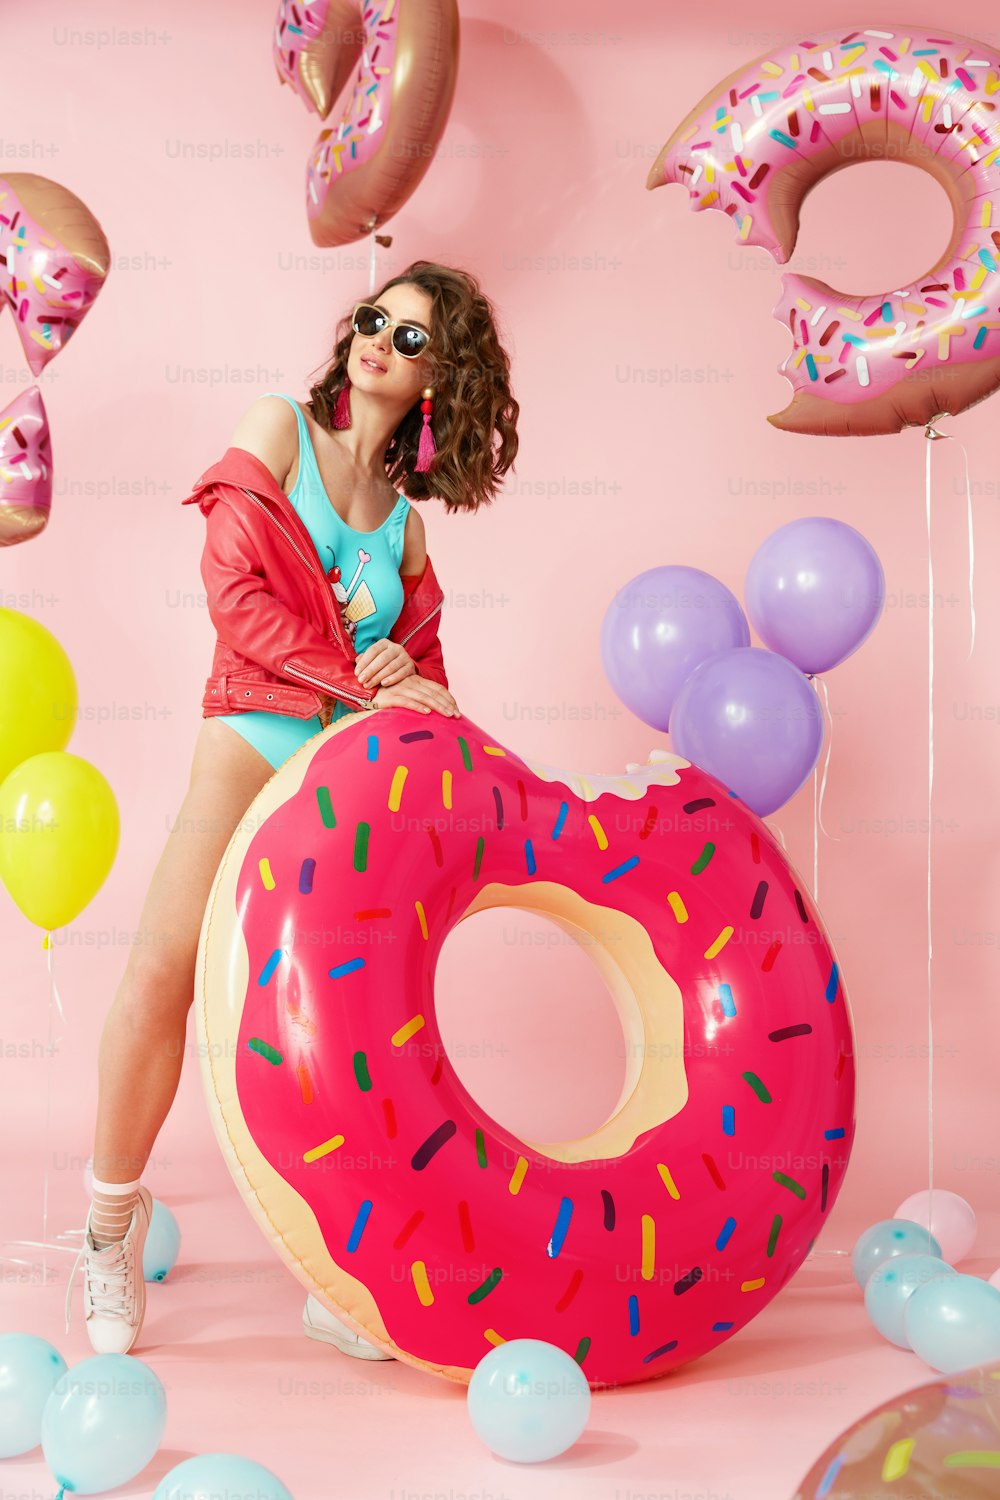 Moda de verano. Mujer en traje de baño con globos. Hermosa modelo femenina joven feliz con cuerpo en forma en trajes de baño coloridos de moda con flotadores de rosquilla inflables en Pink Bakcground. Alta resolución.